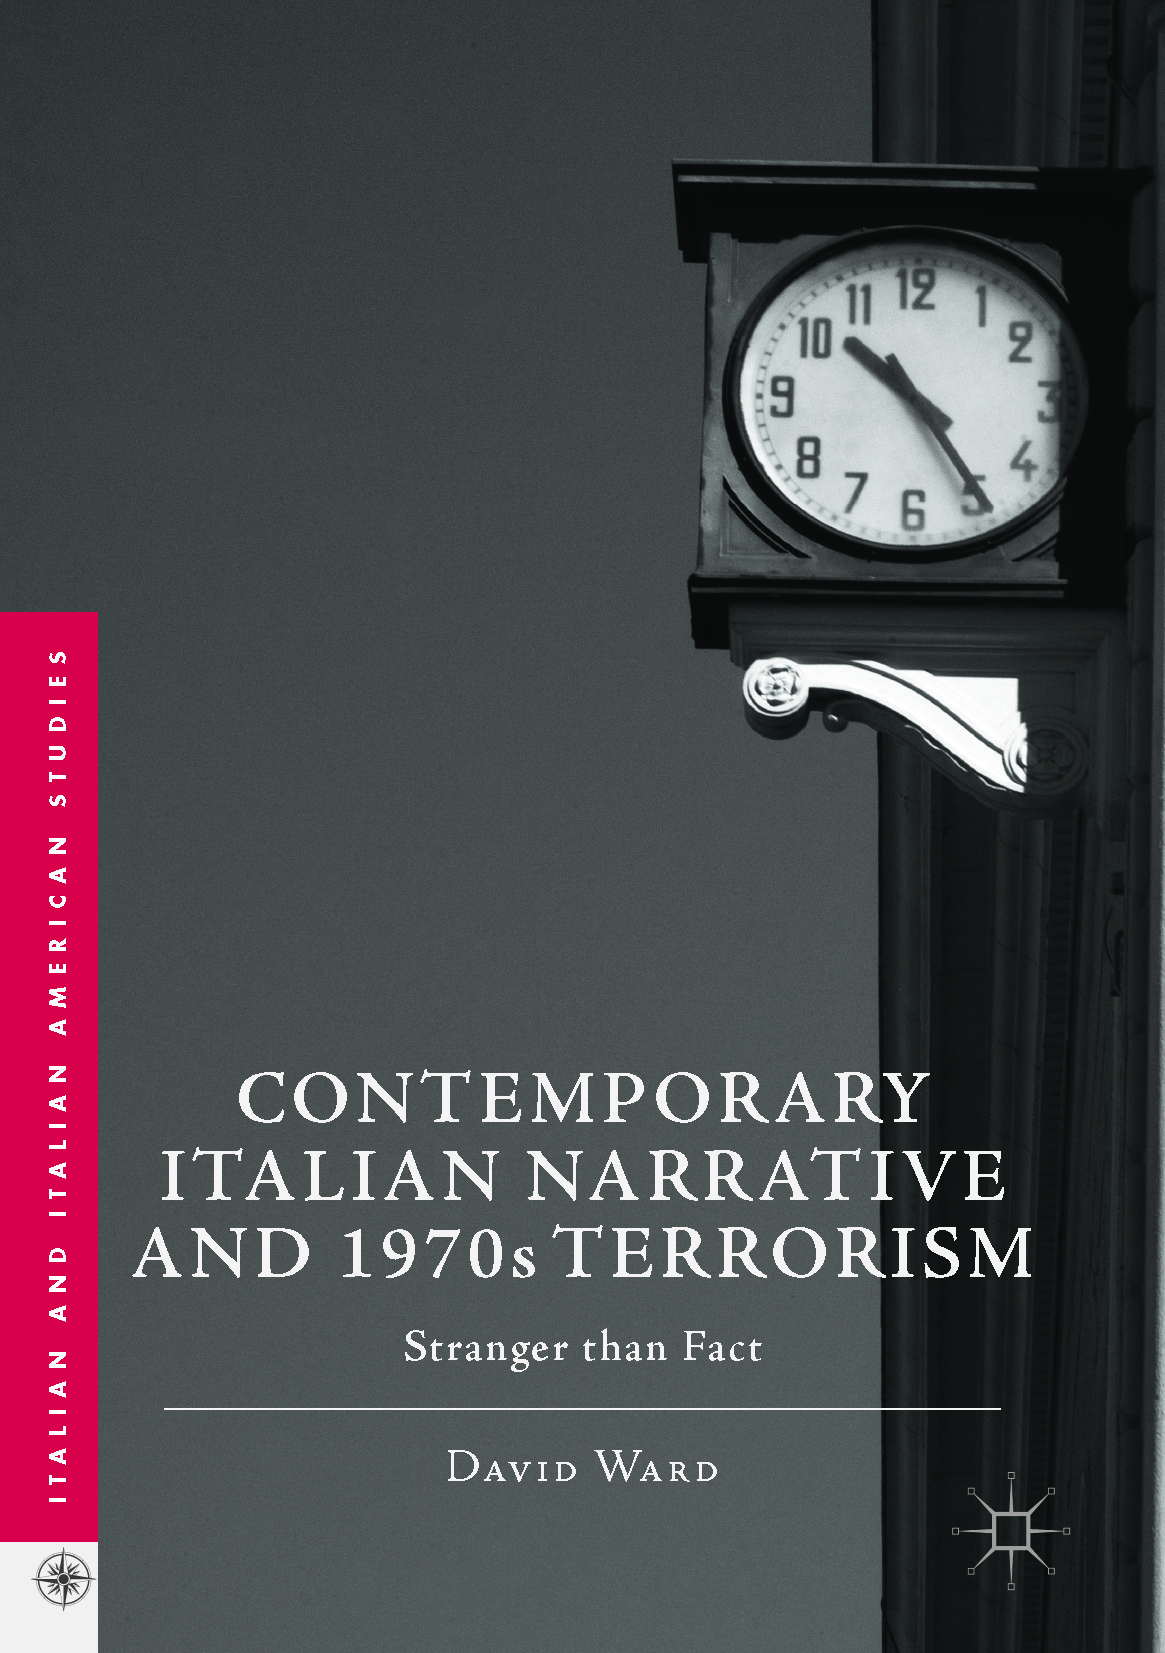 Ward, David - Contemporary Italian Narrative and 1970s Terrorism, ebook